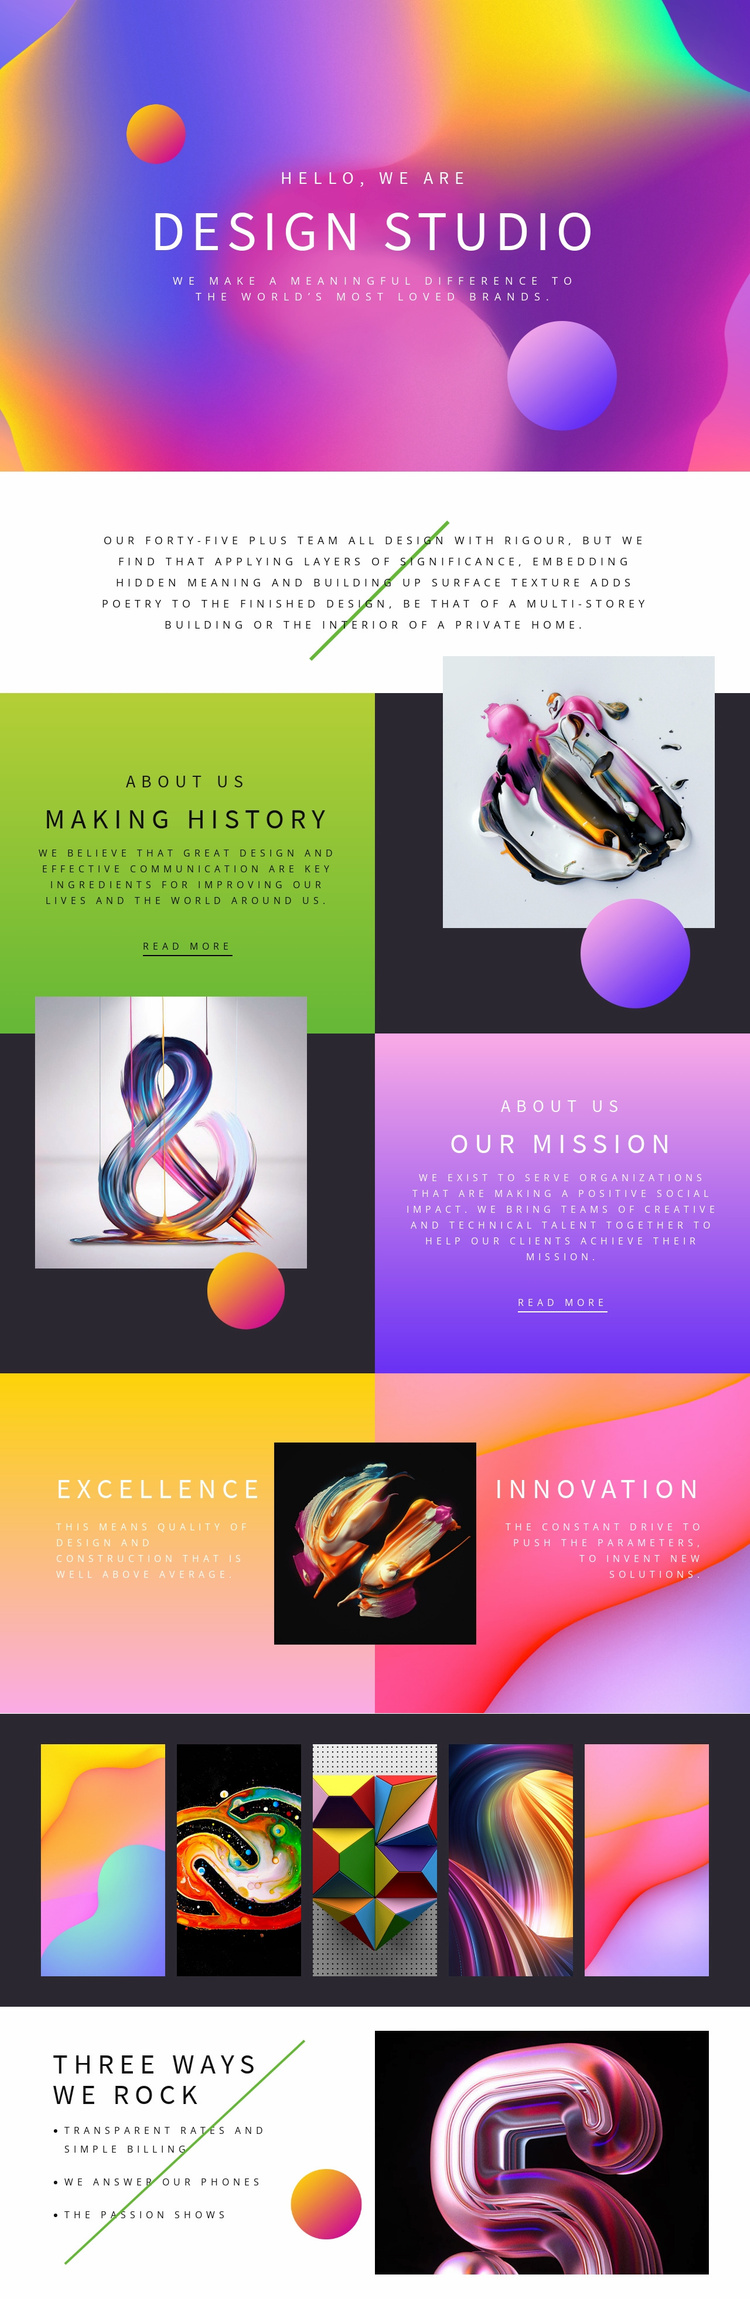 Progressive design art Website Template